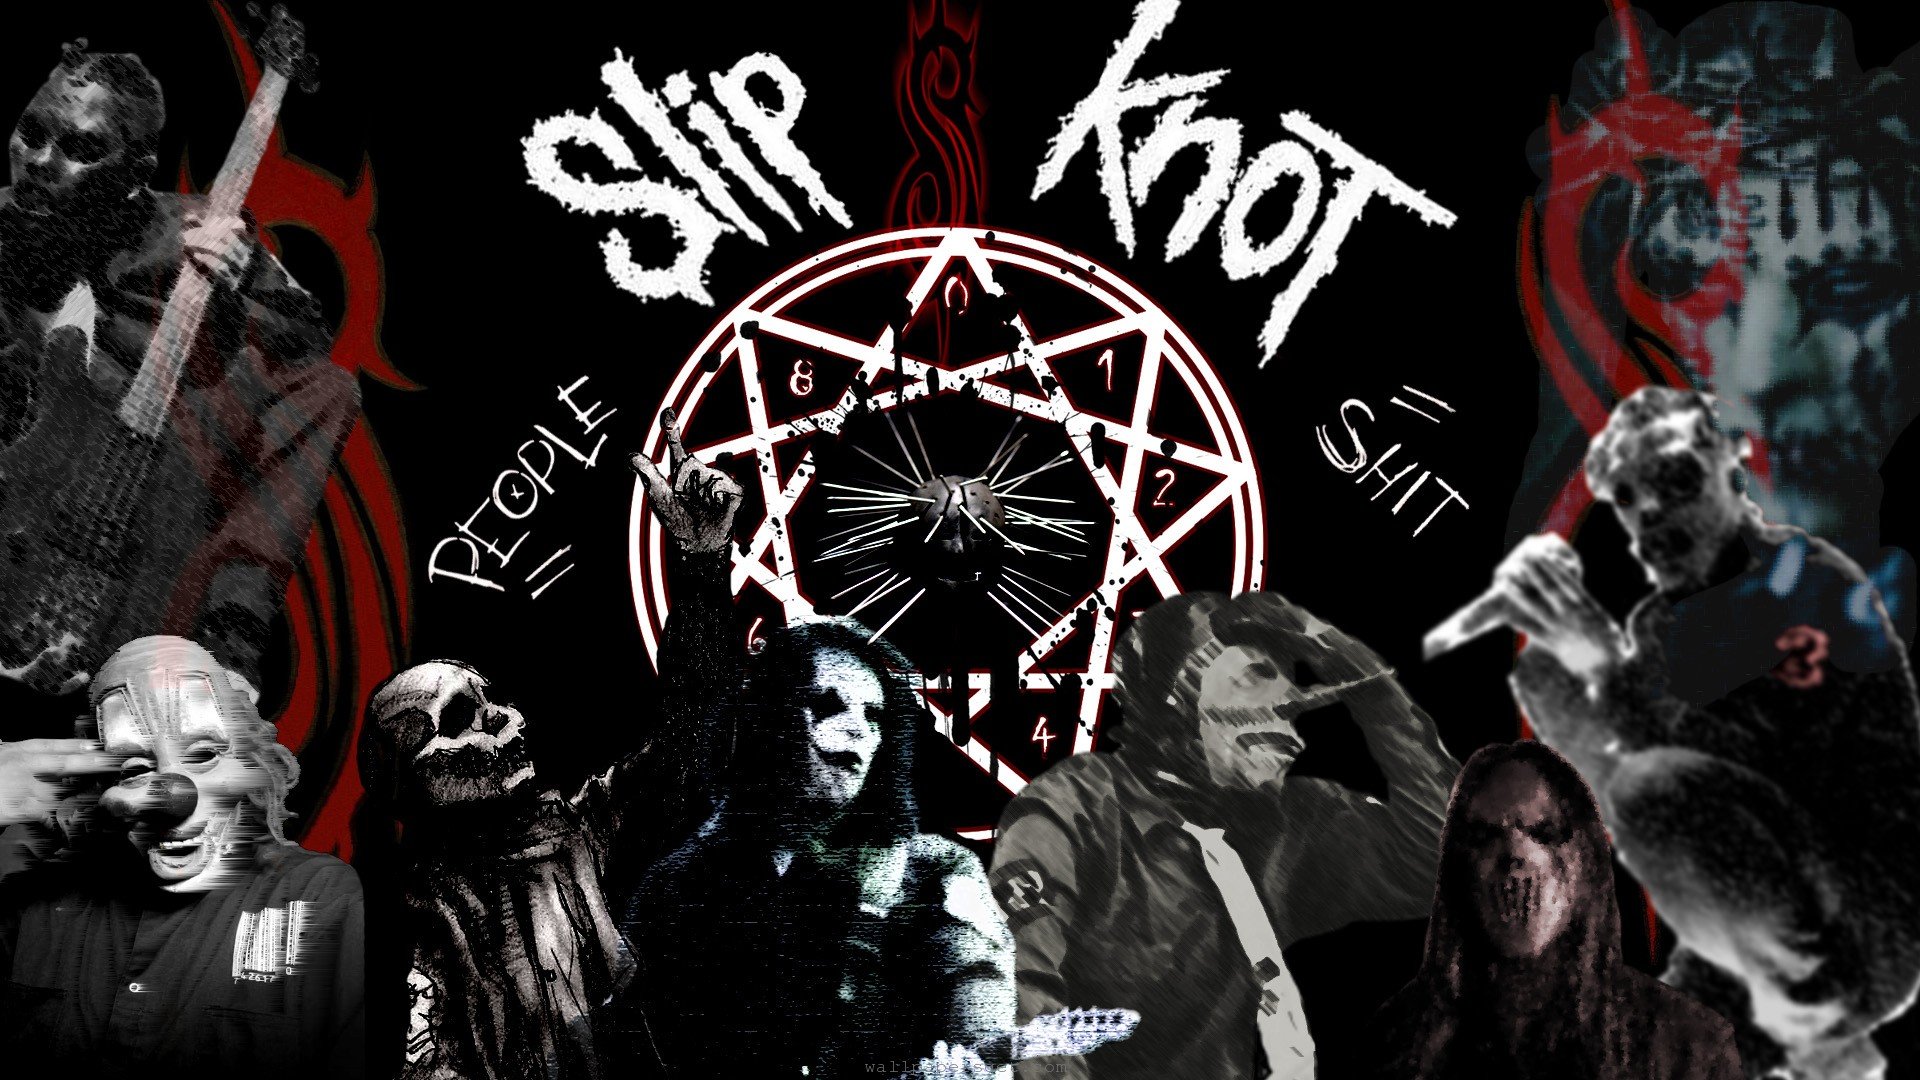 Awesome Slipknot free wallpaper ID:19858 for 1080p desktop